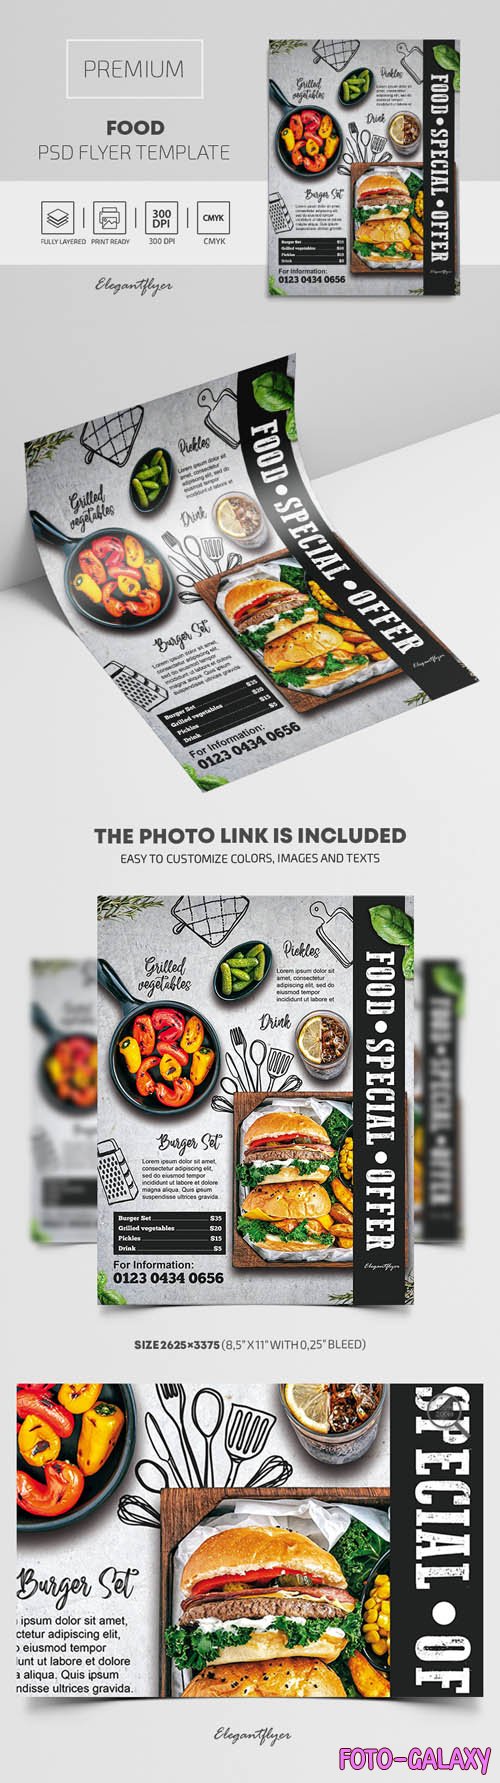 Food Premium PSD Flyer Template vol 2